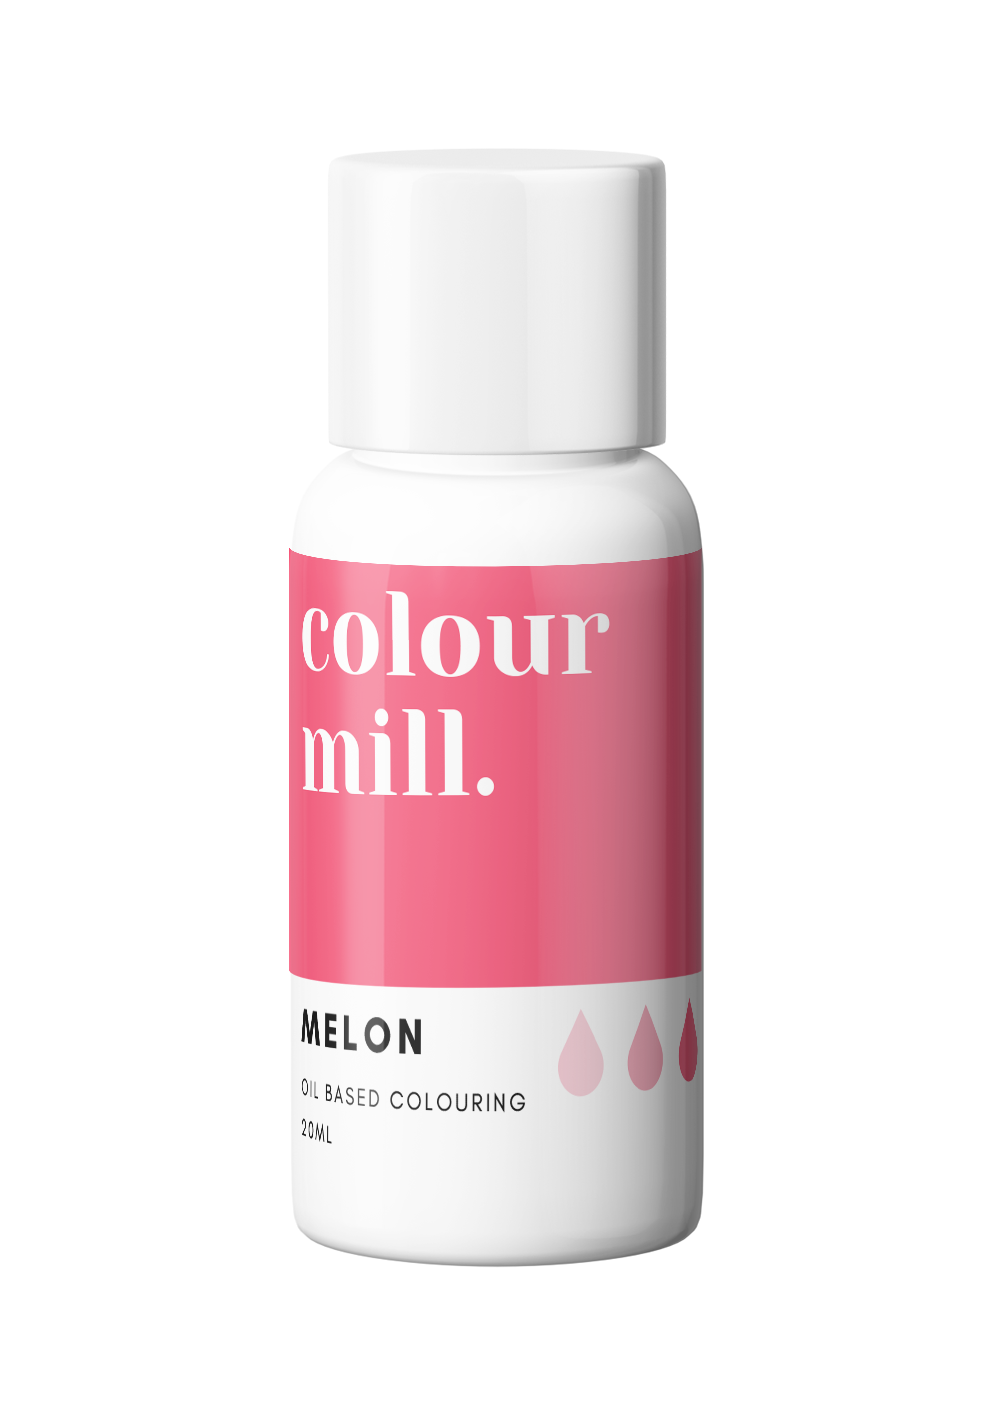 Colour Mill Oil Based Colouring 20ml - Melon